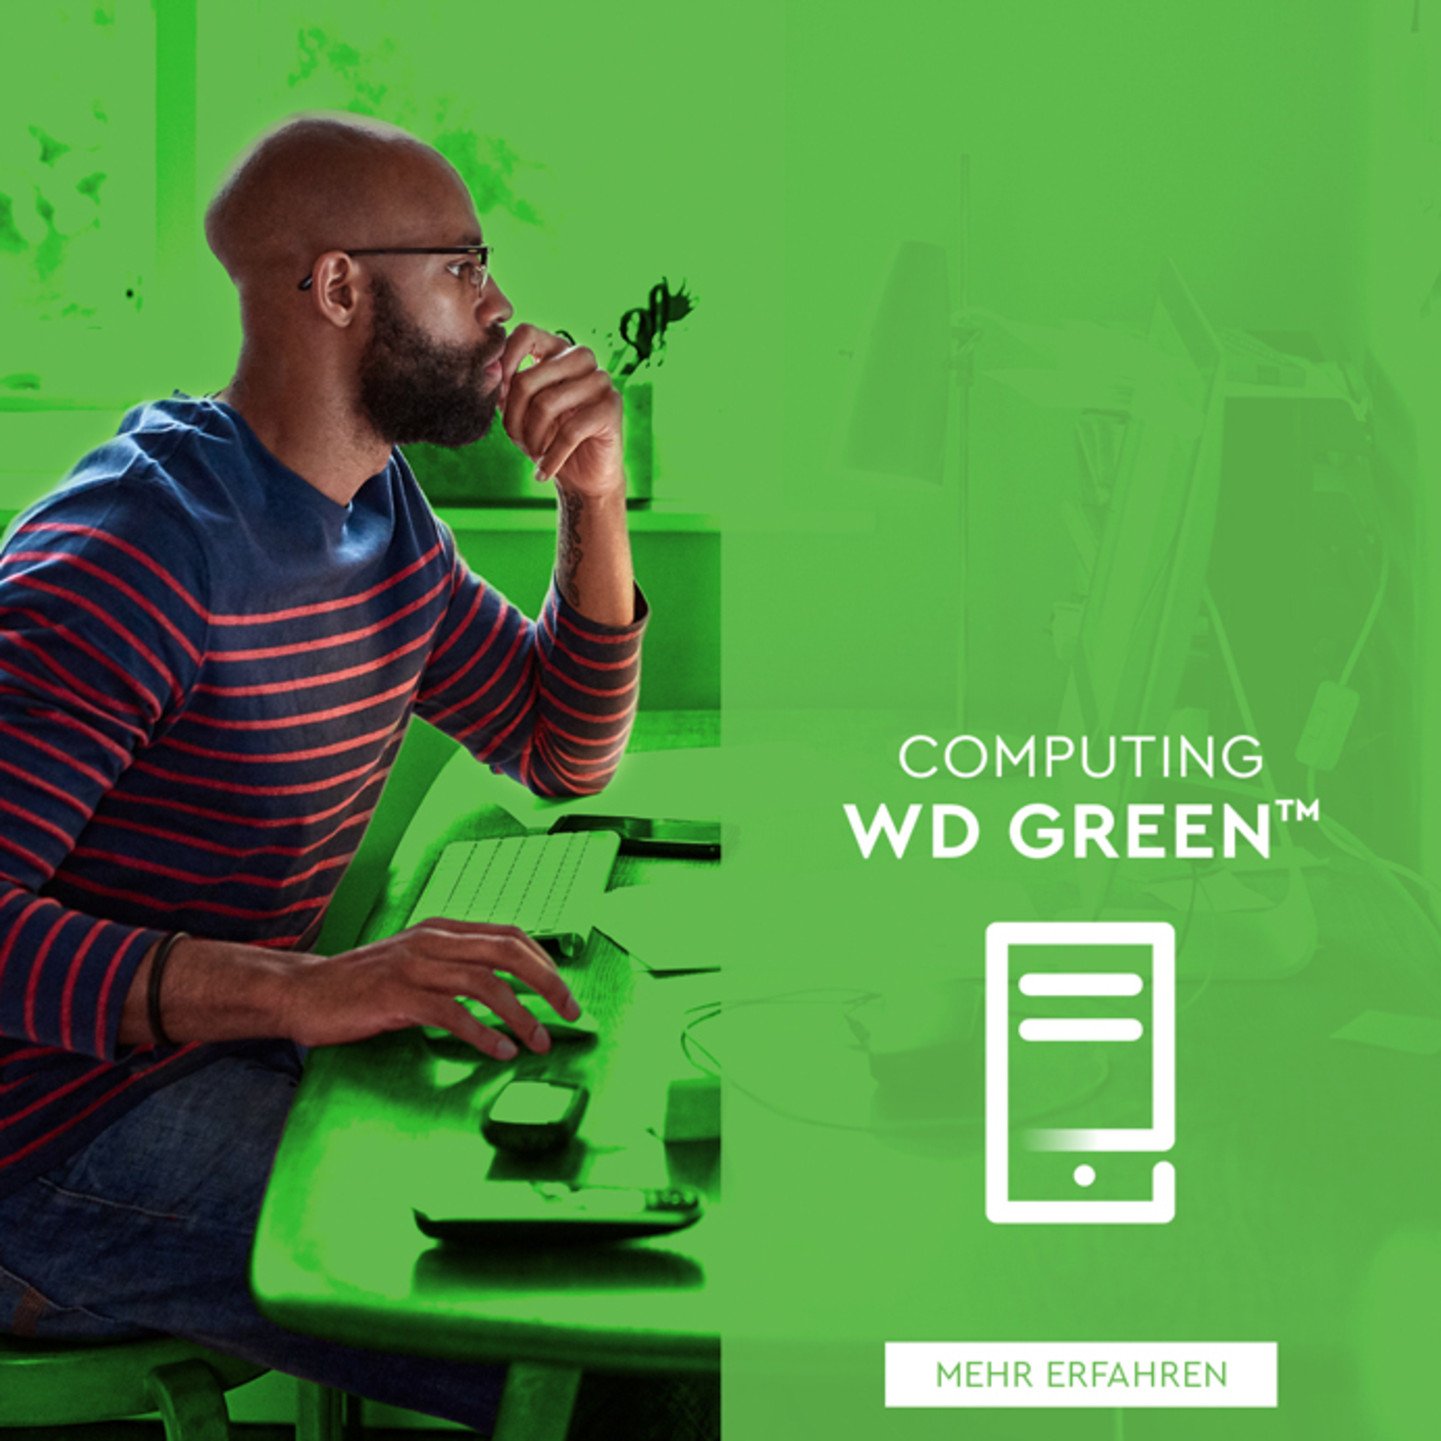 Computing WD GREEN